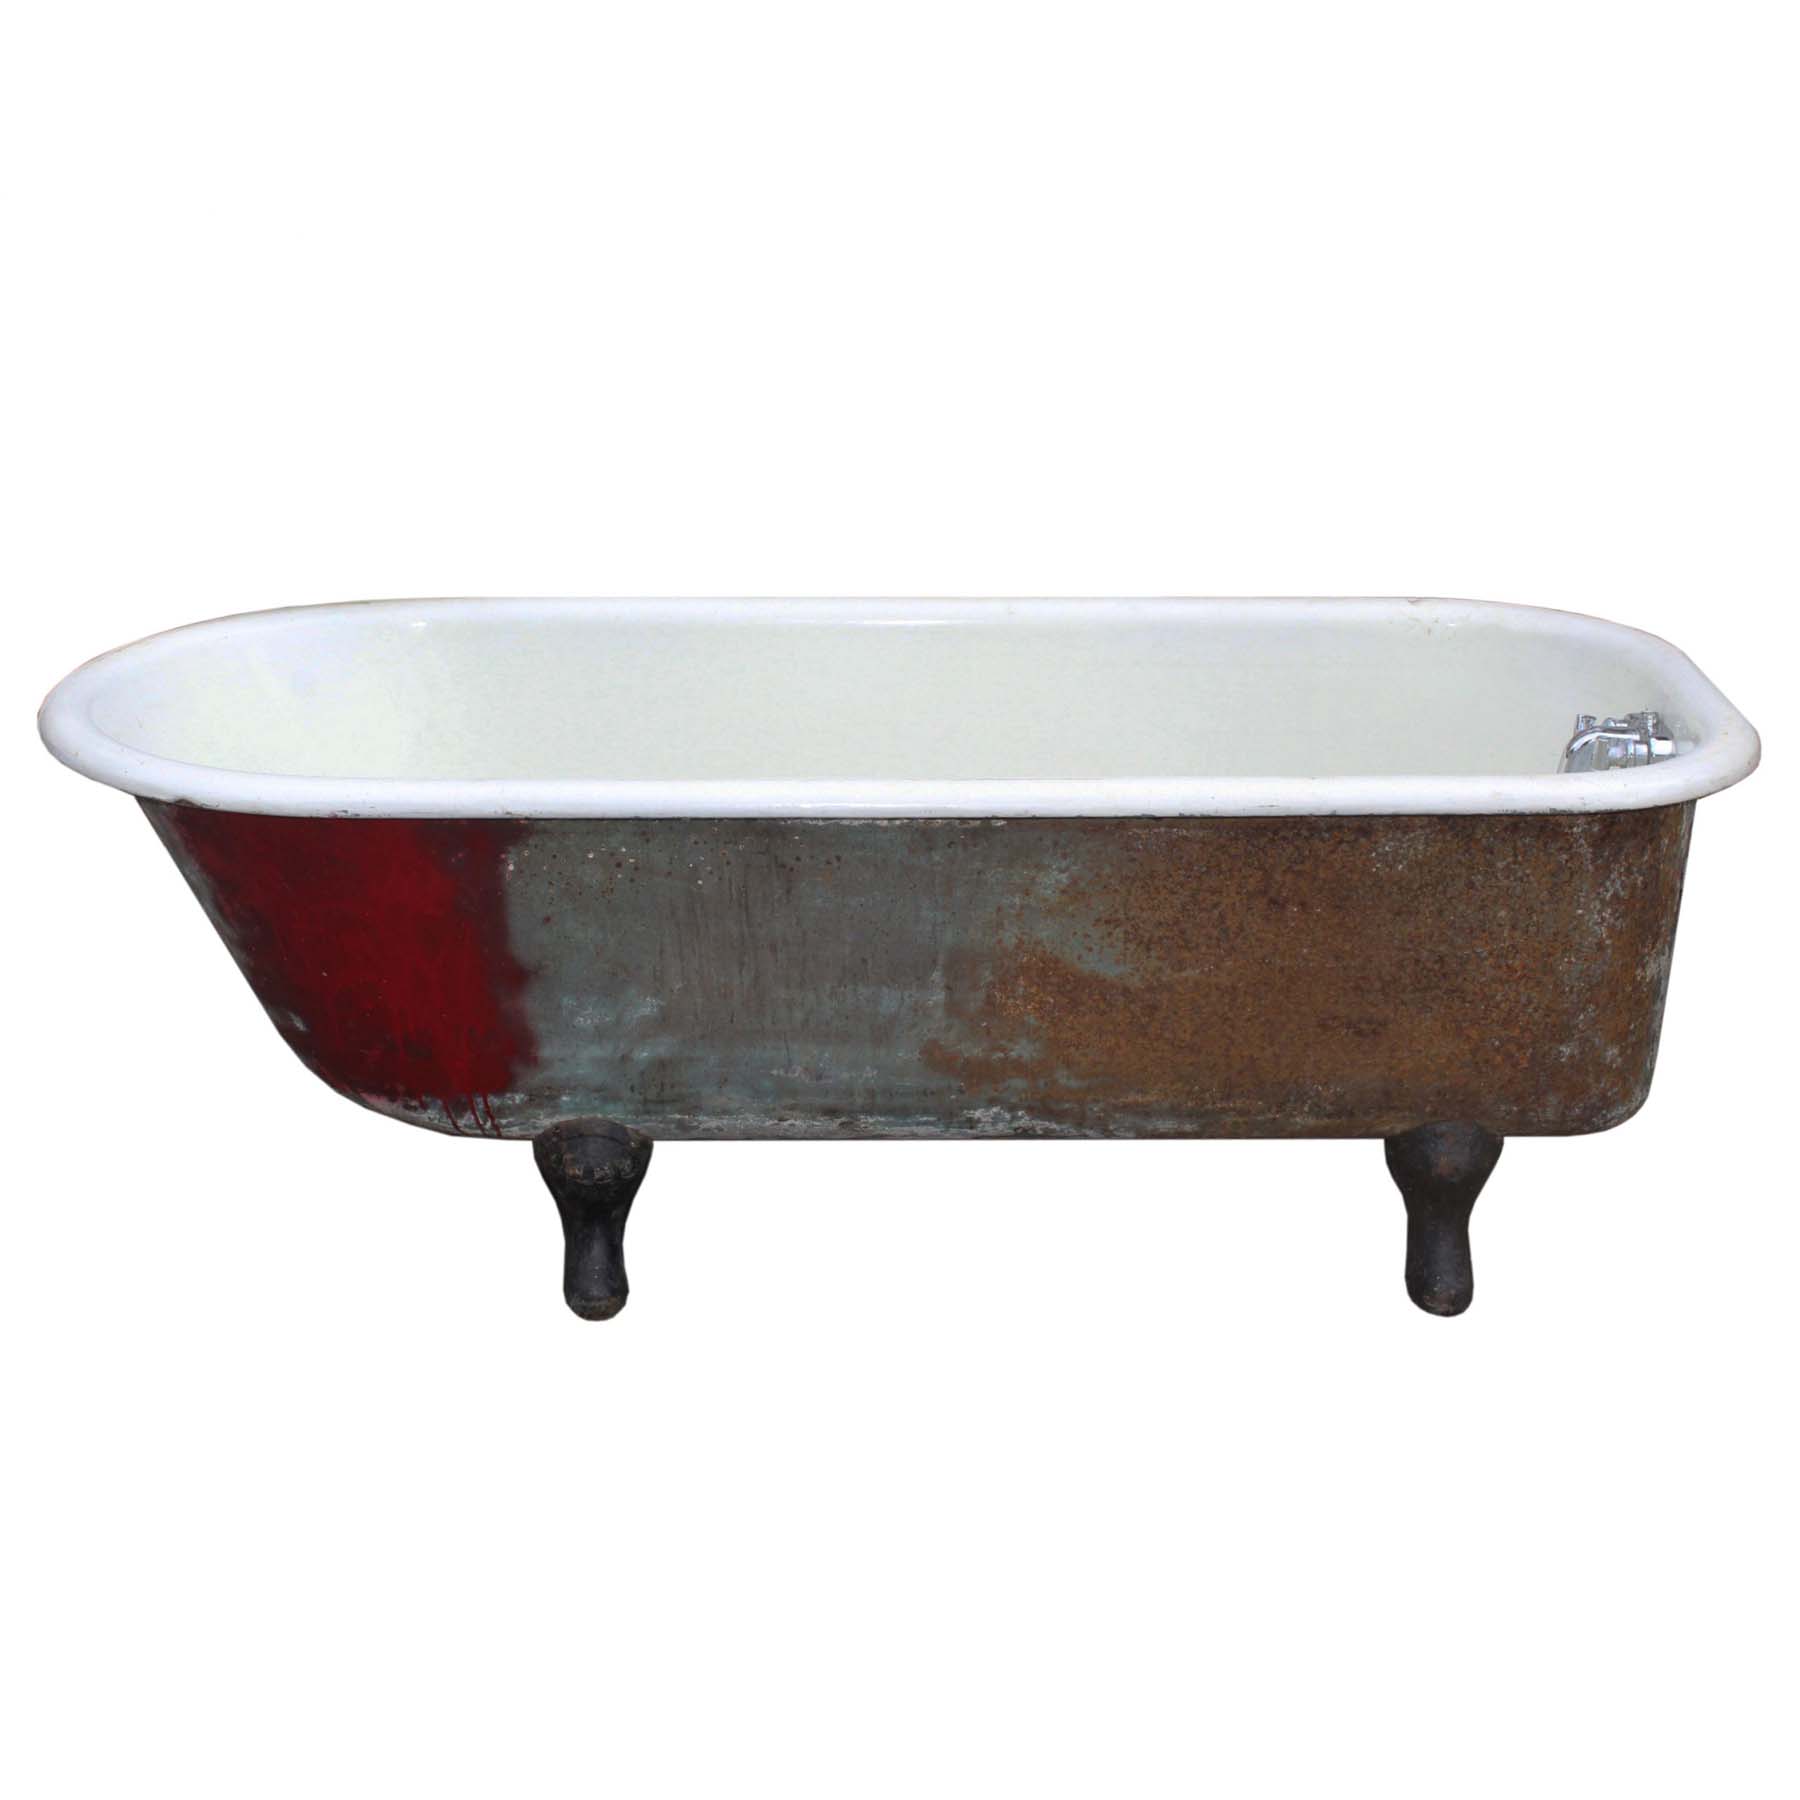 SOLD Salvaged Antique Clawfoot Bath Tub, 5’5"-0